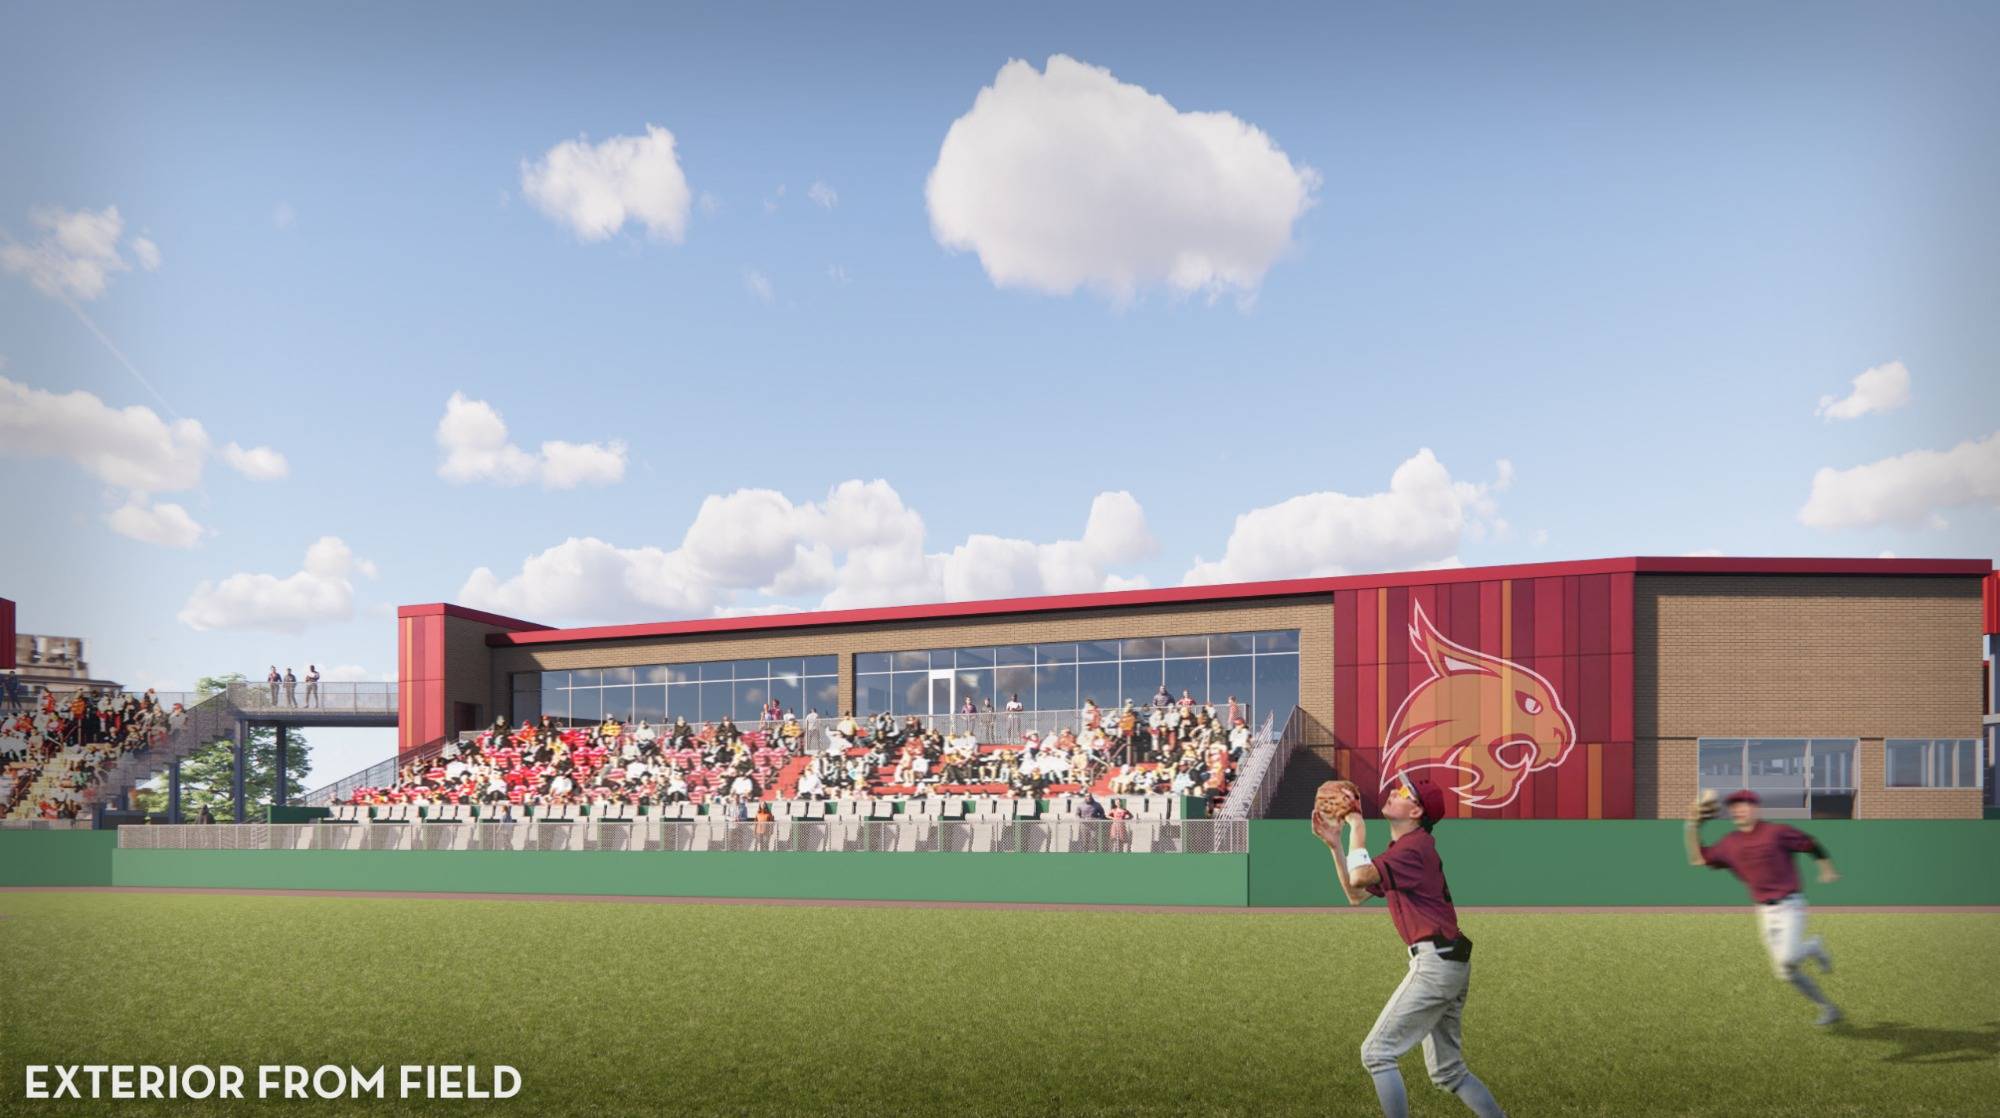 digital rendering of stands at baseball field